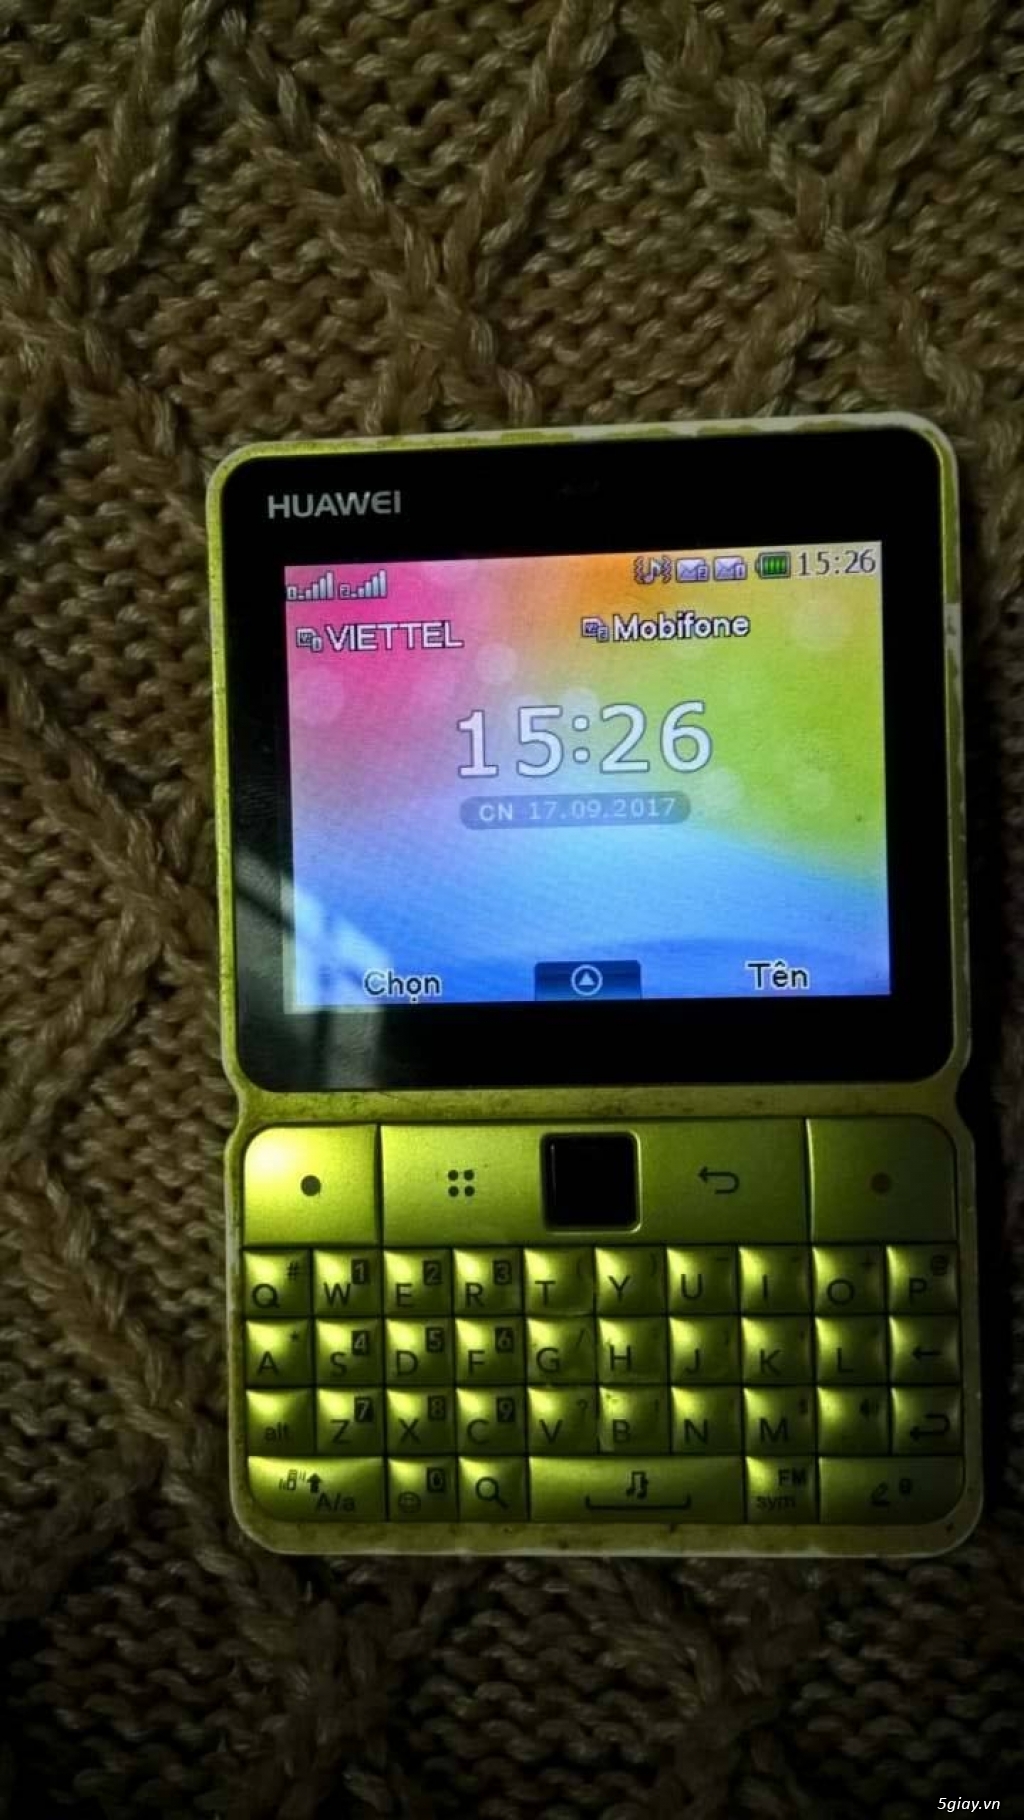 Nokia e63, n2630, nokia x2-01, n6233, n6120c, huawei g6680 - 23